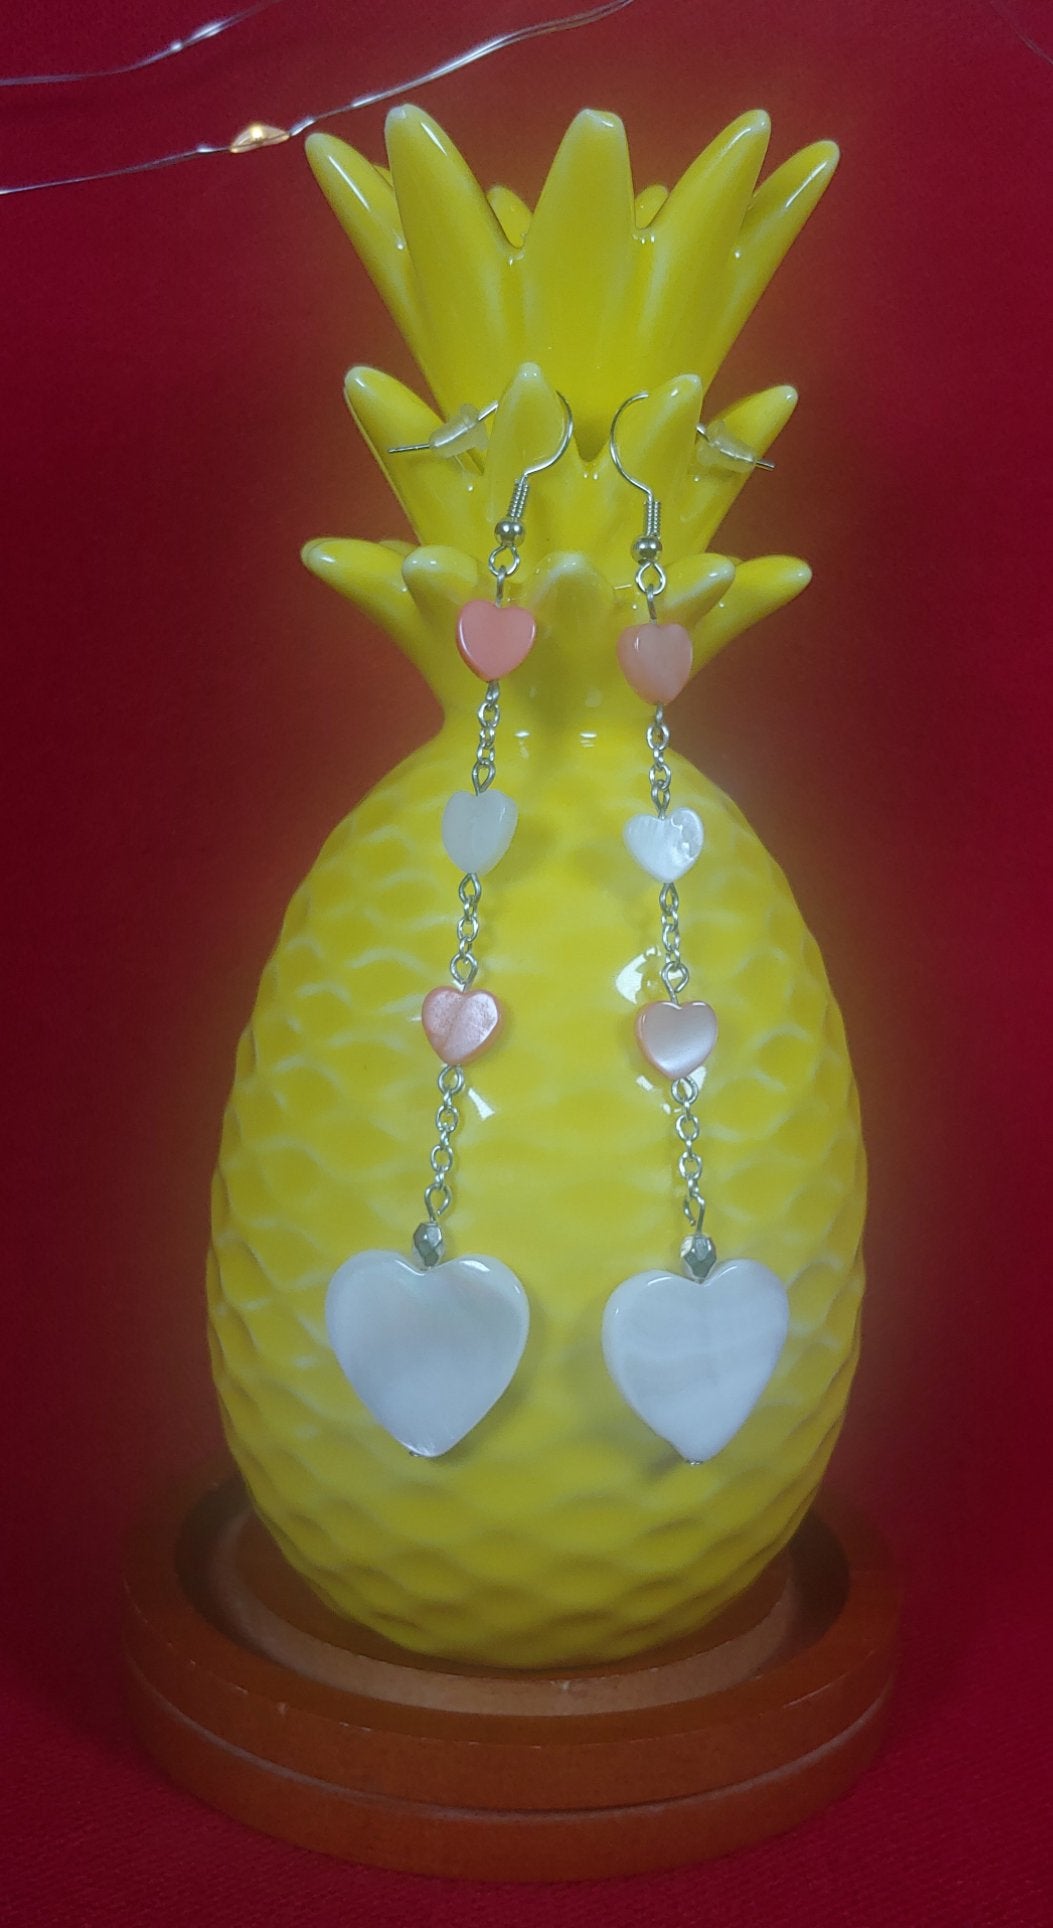 Coral & White Heart Earrings